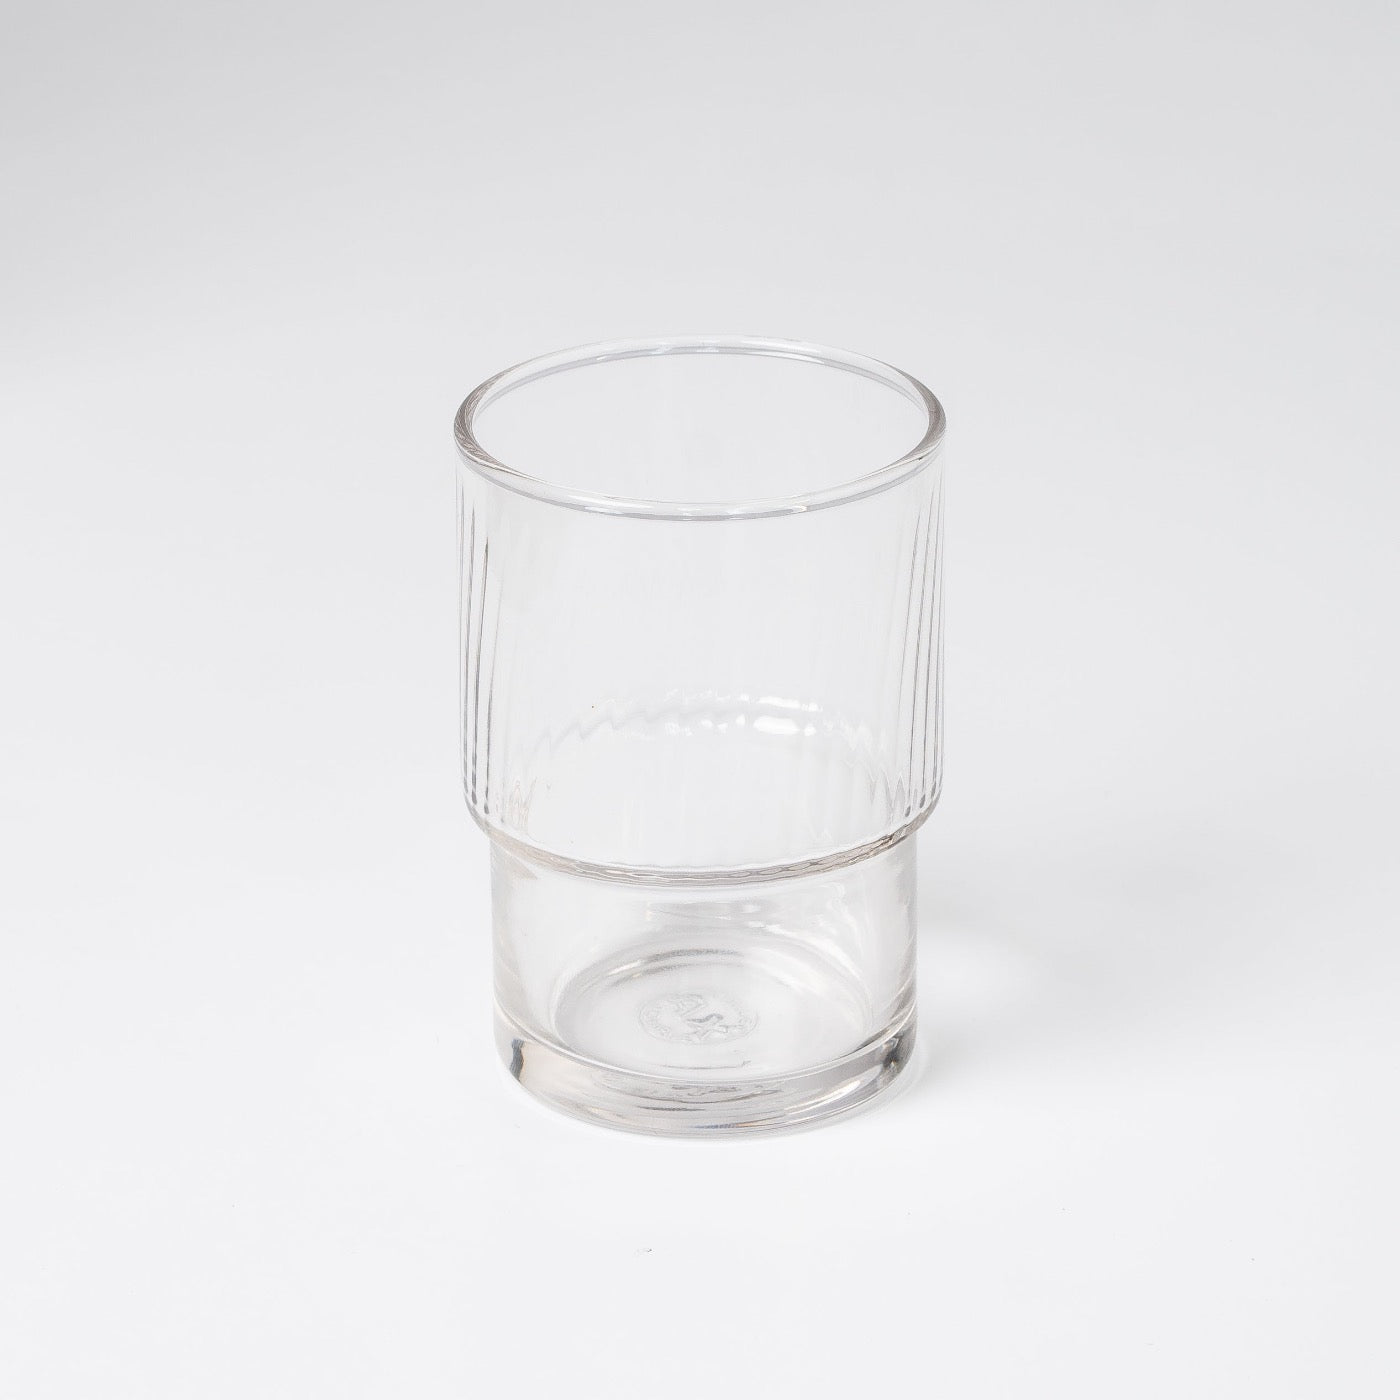 medium stacking glass by Ishizuka Glass